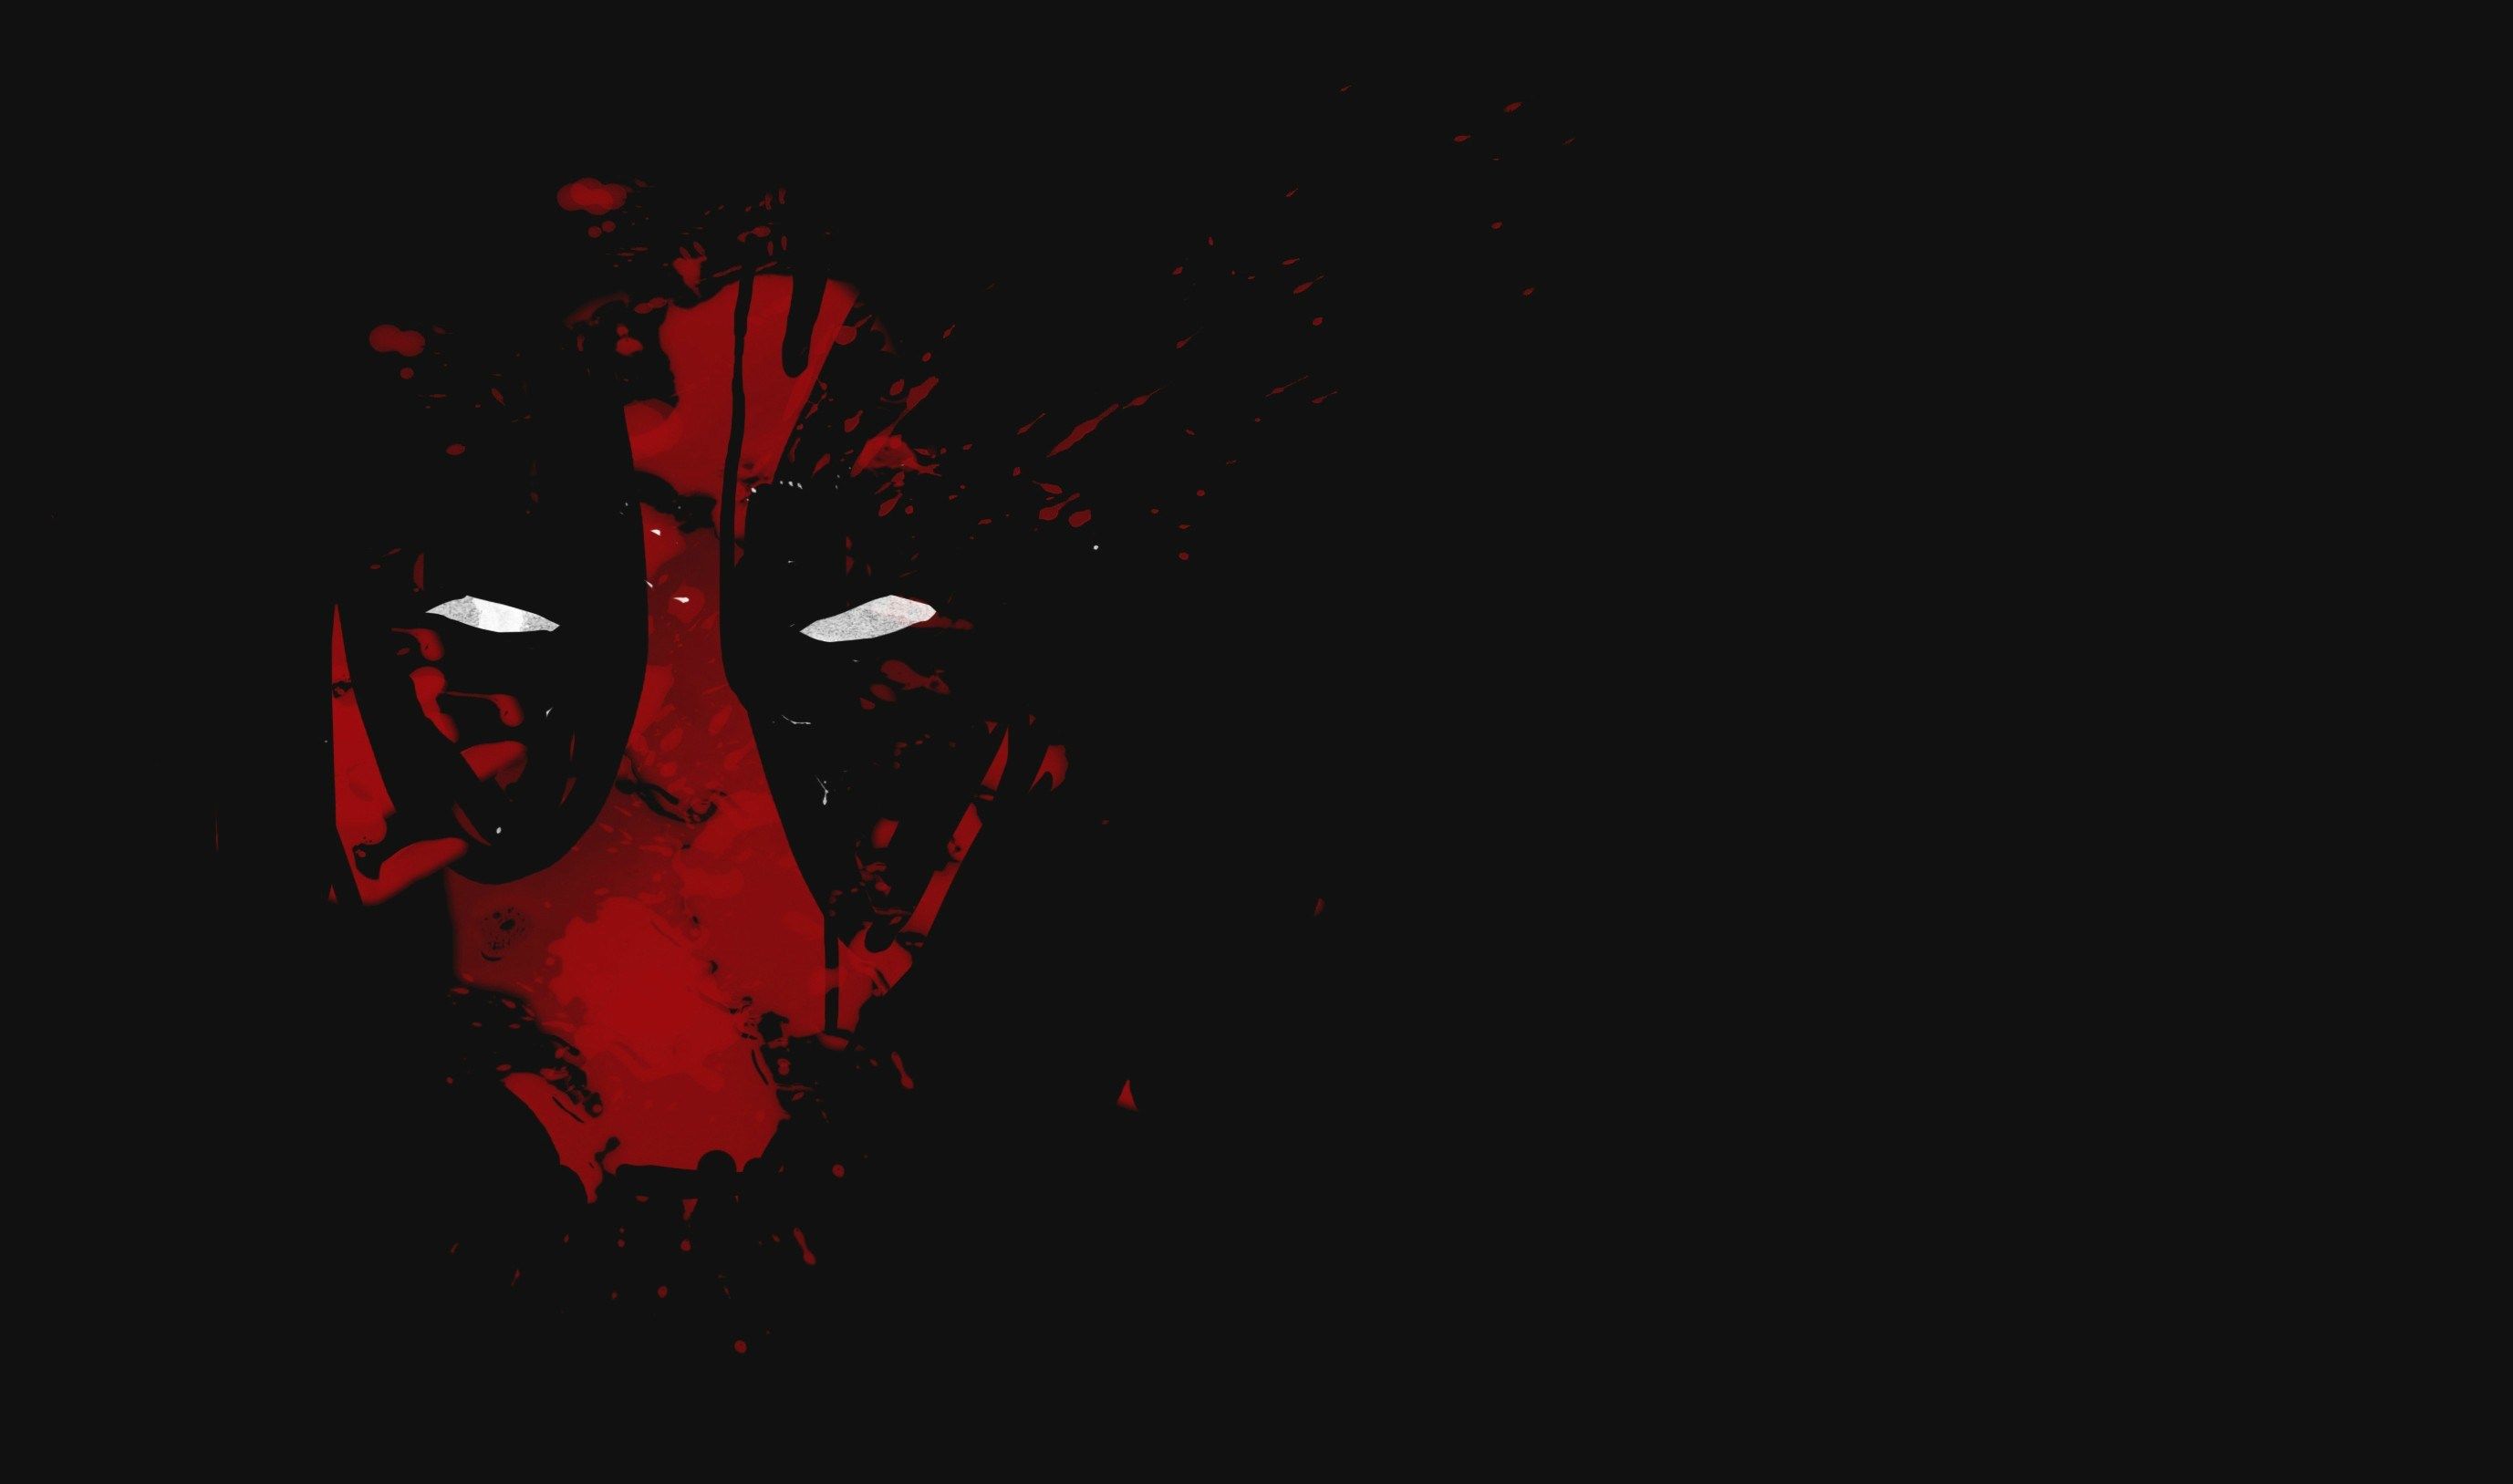 örümcek adam wallpaper,red,black,head,darkness,fictional character